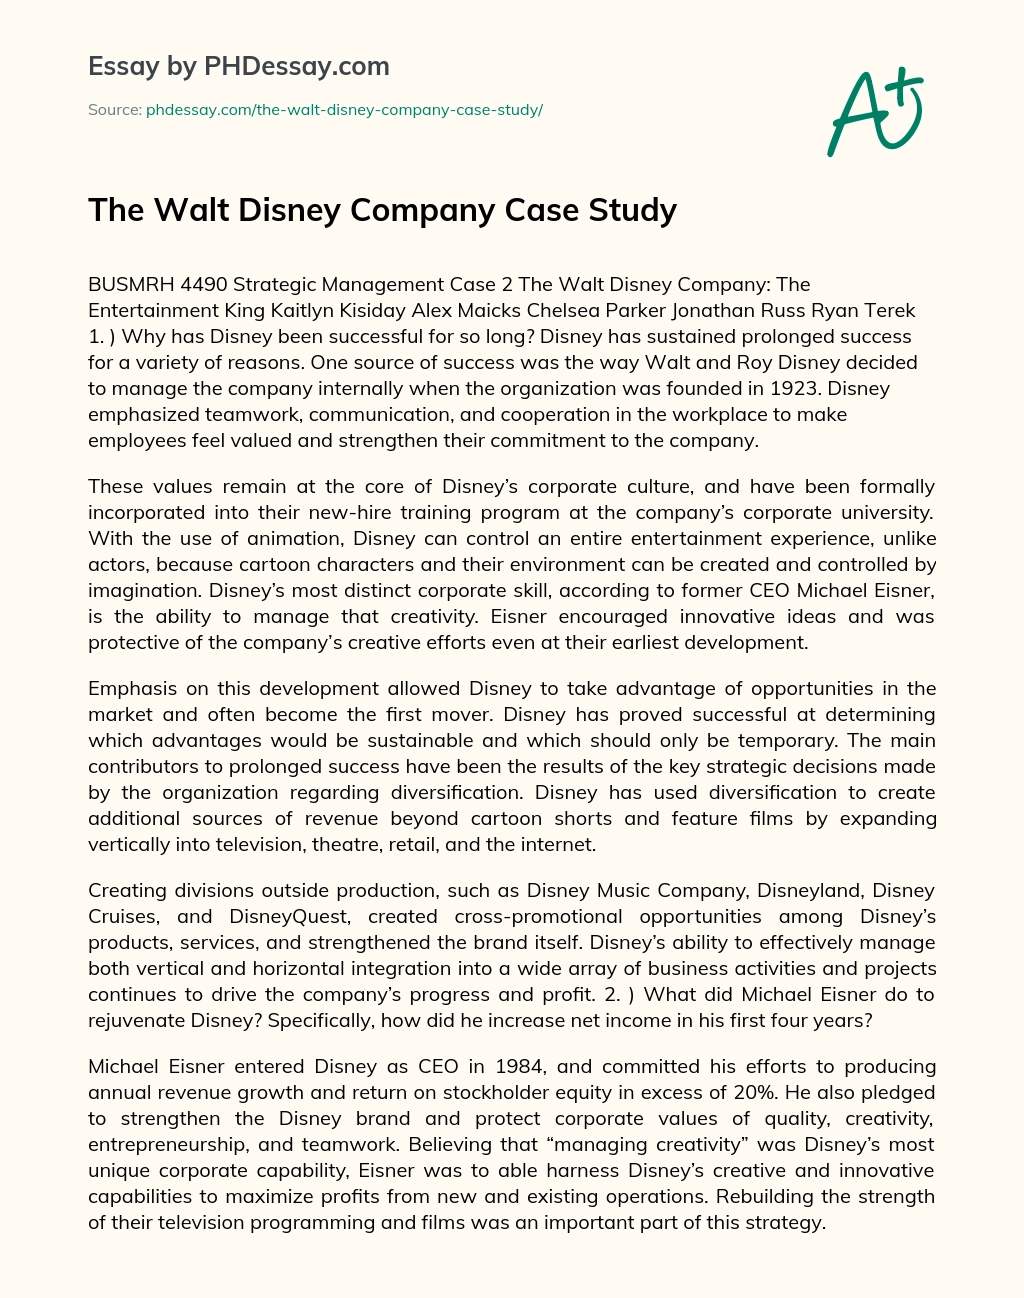 The Walt Disney Company Case Study essay